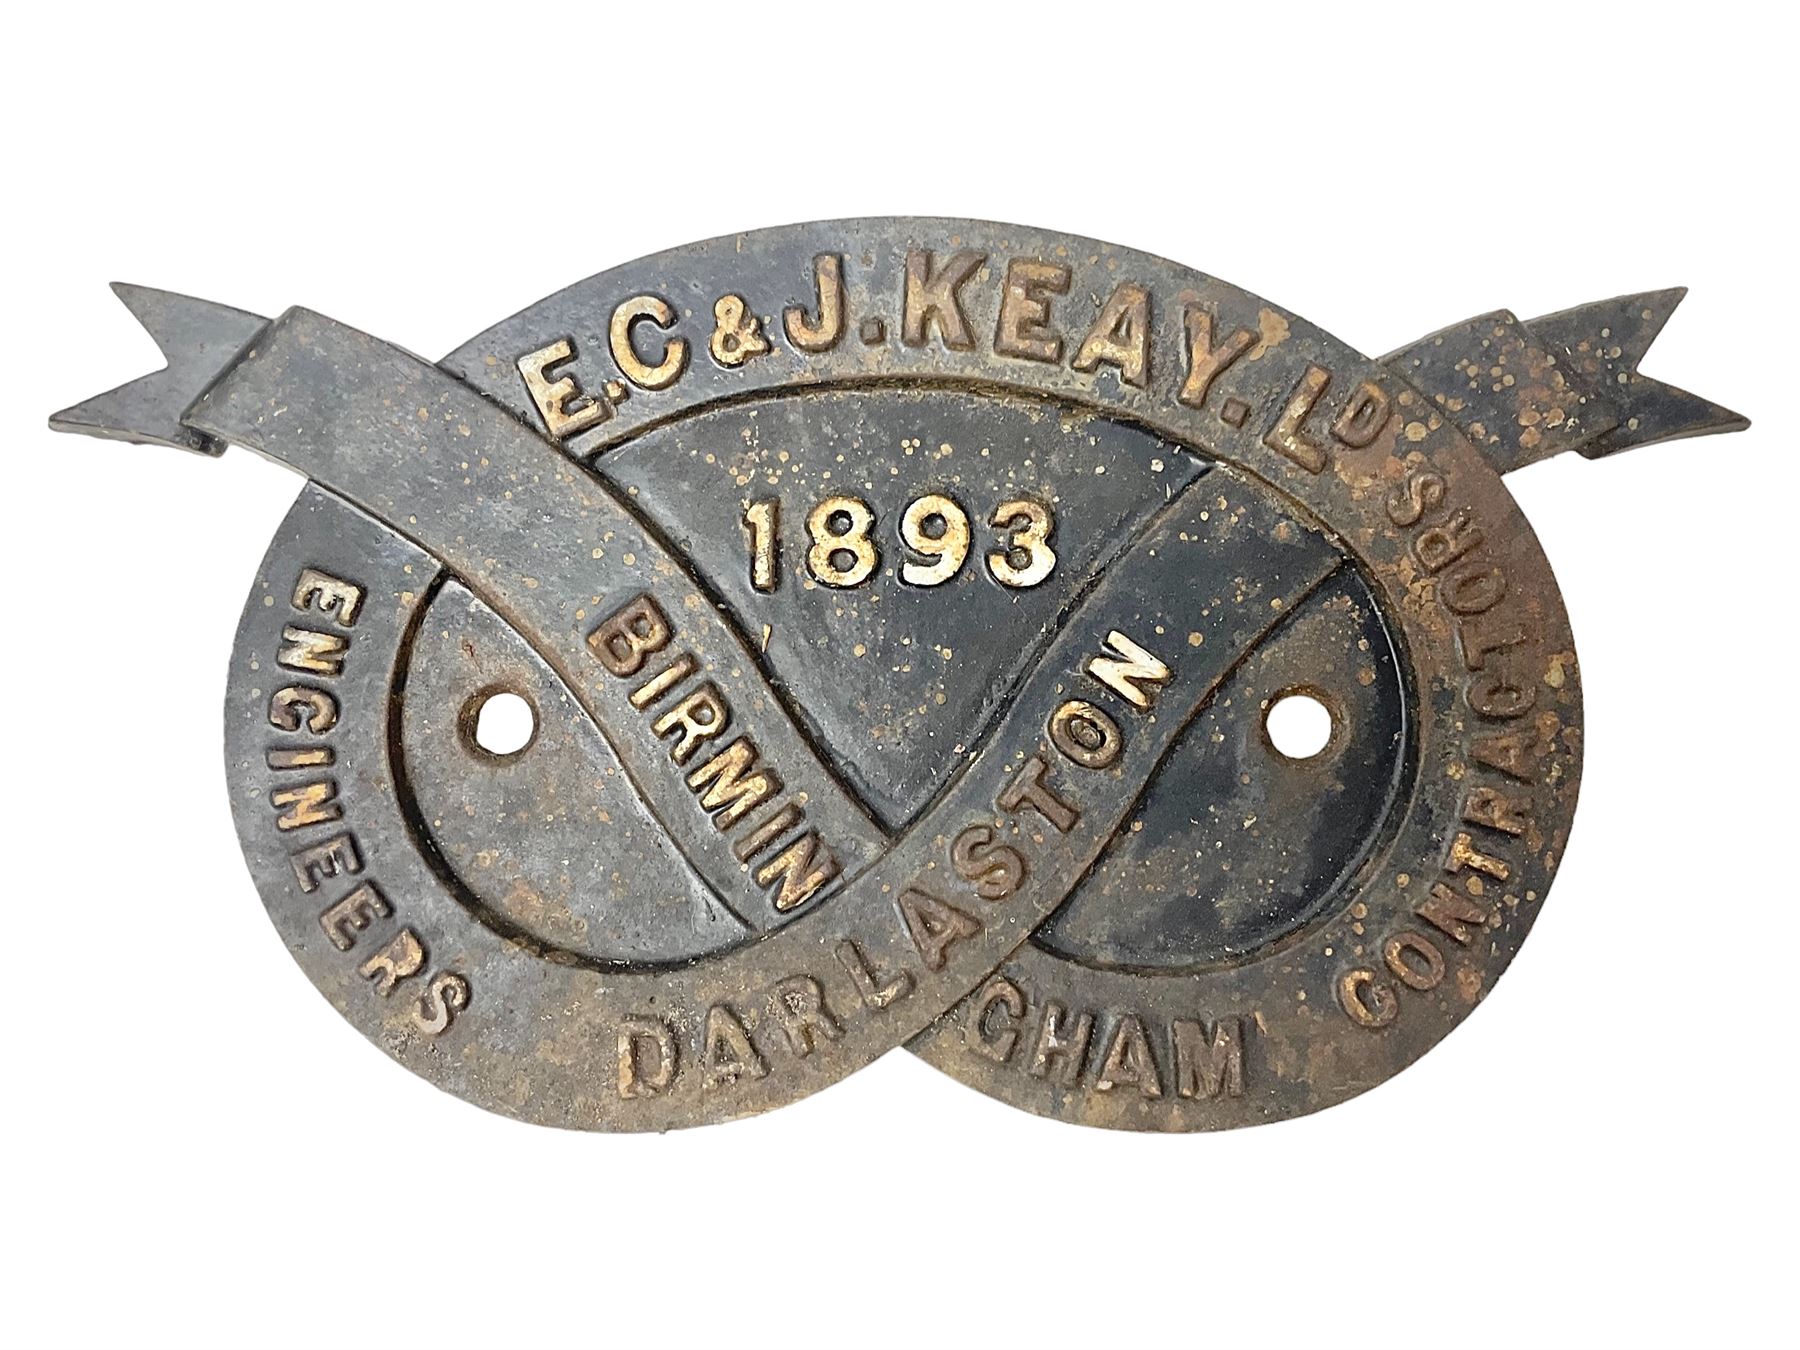 Victorian cast iron railway bridge makers plate